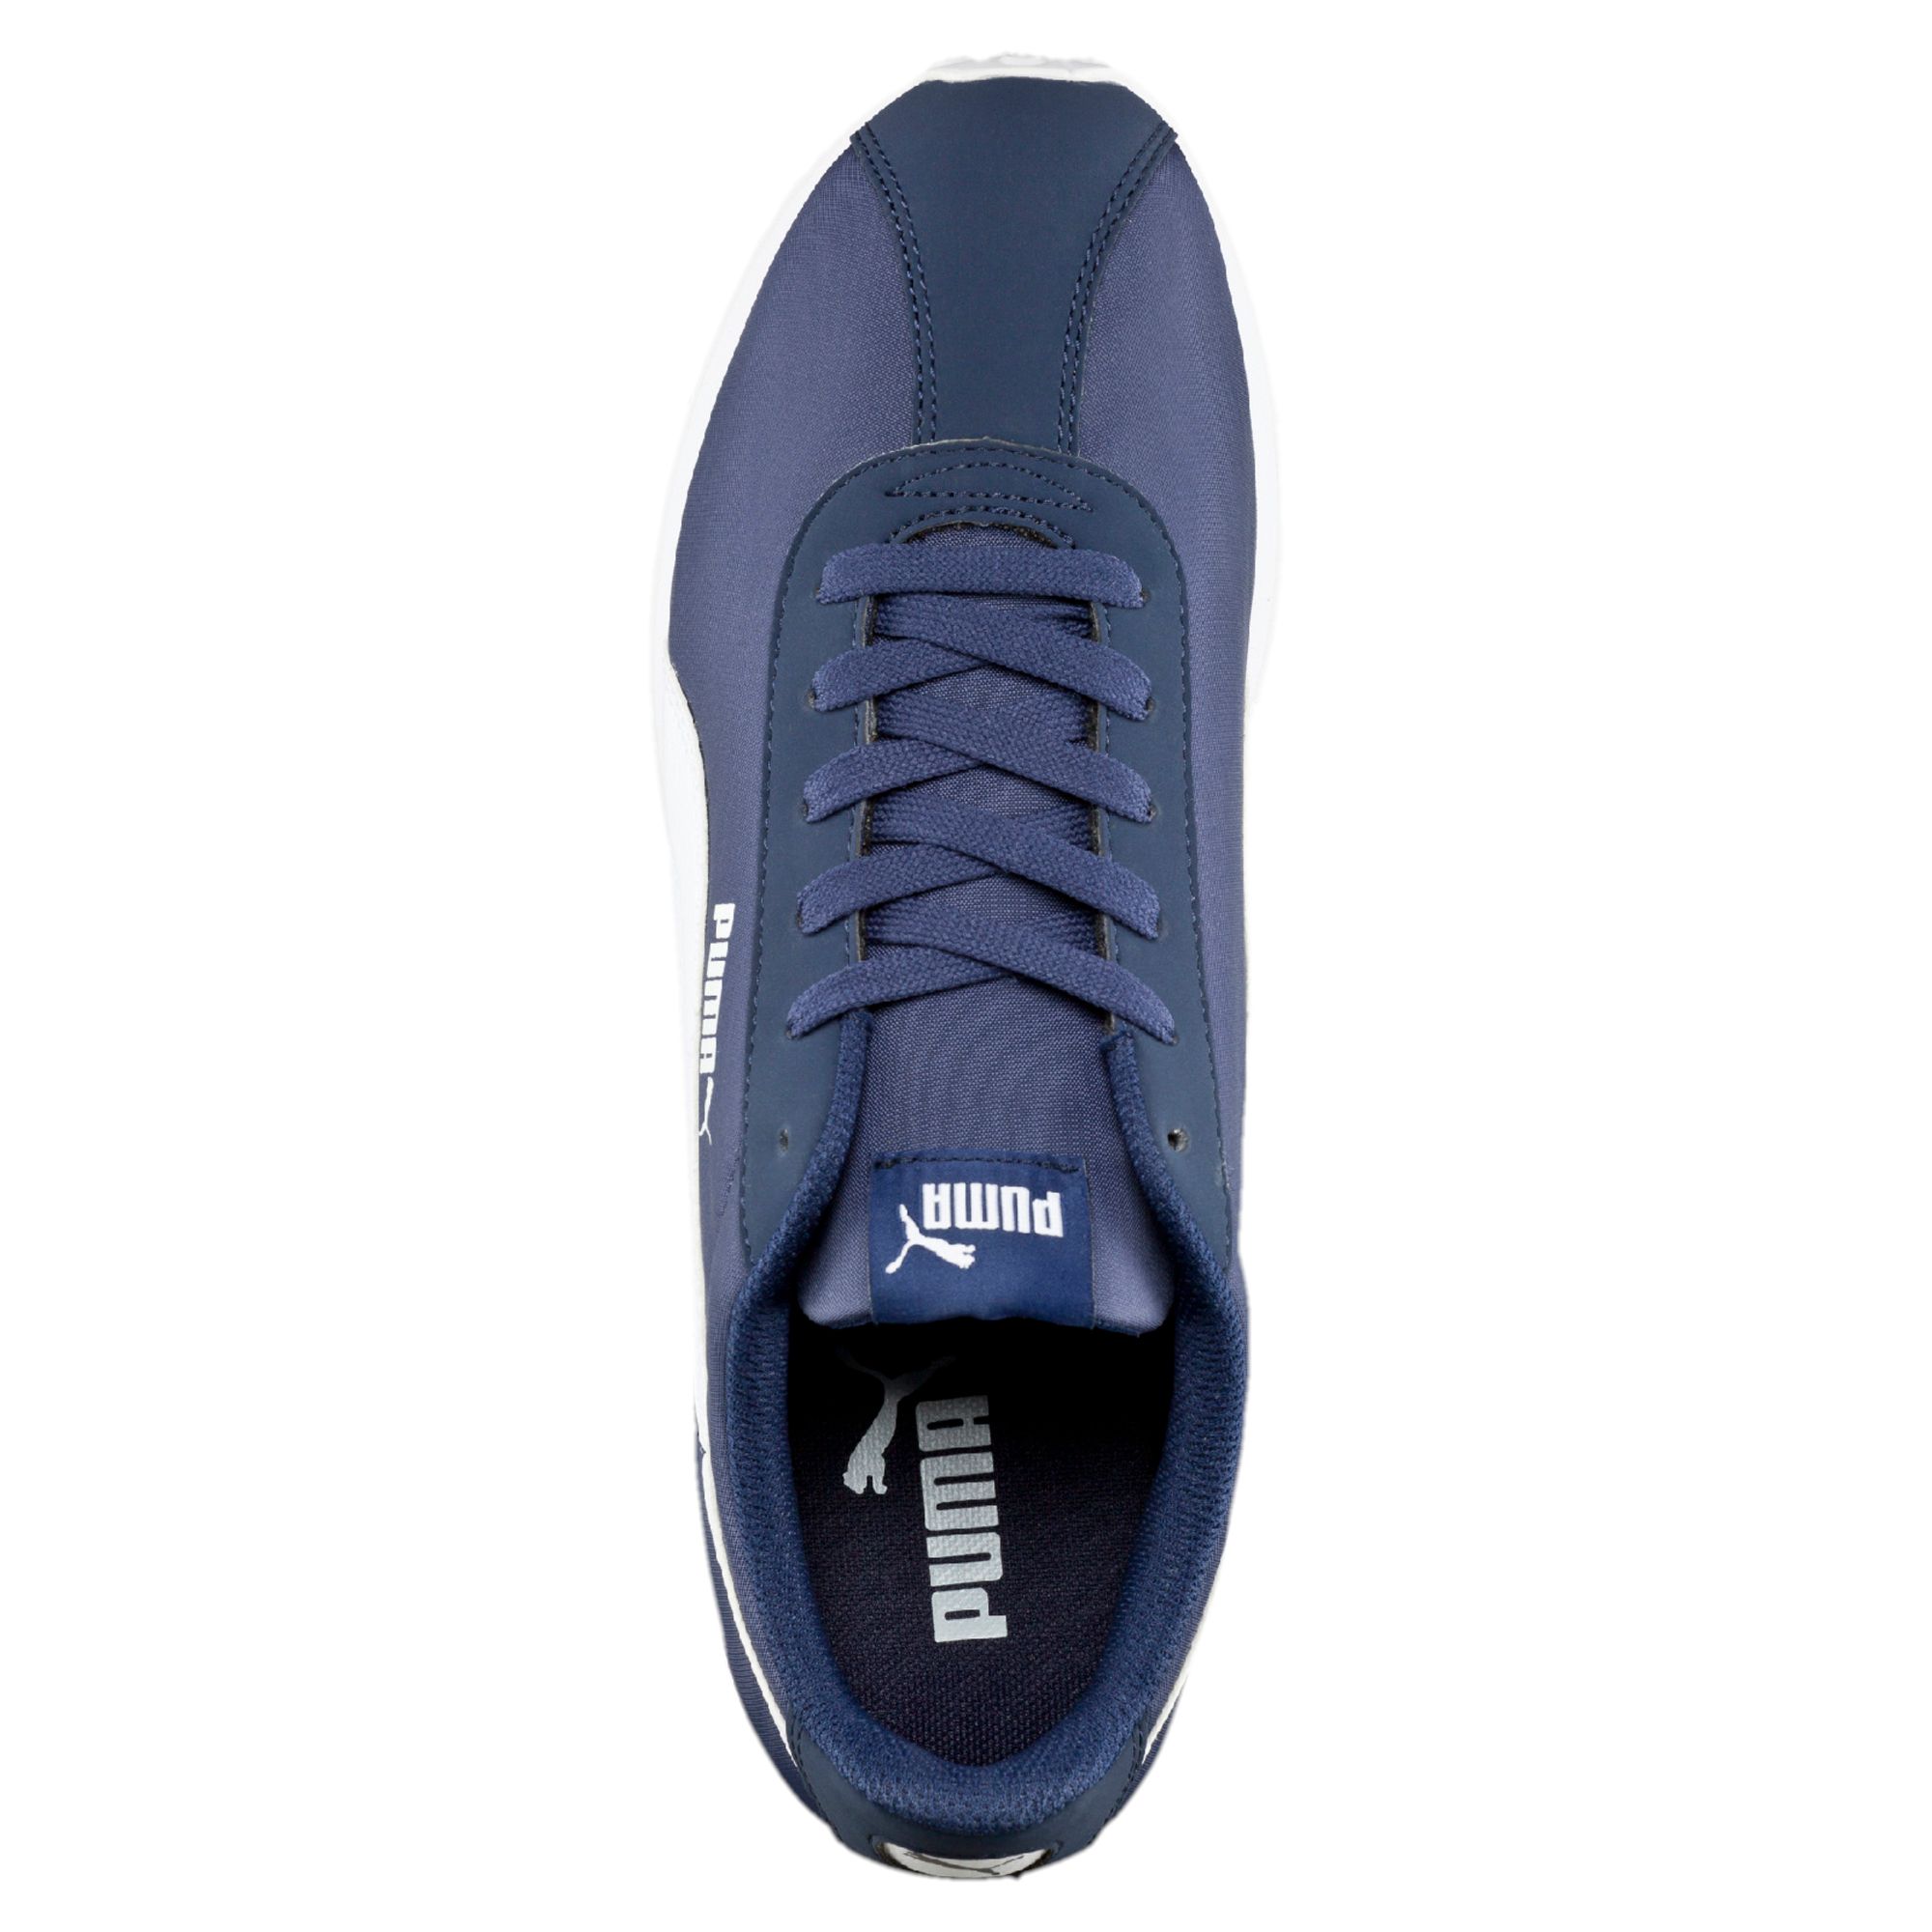 Puma Turin NL blue  362167-02